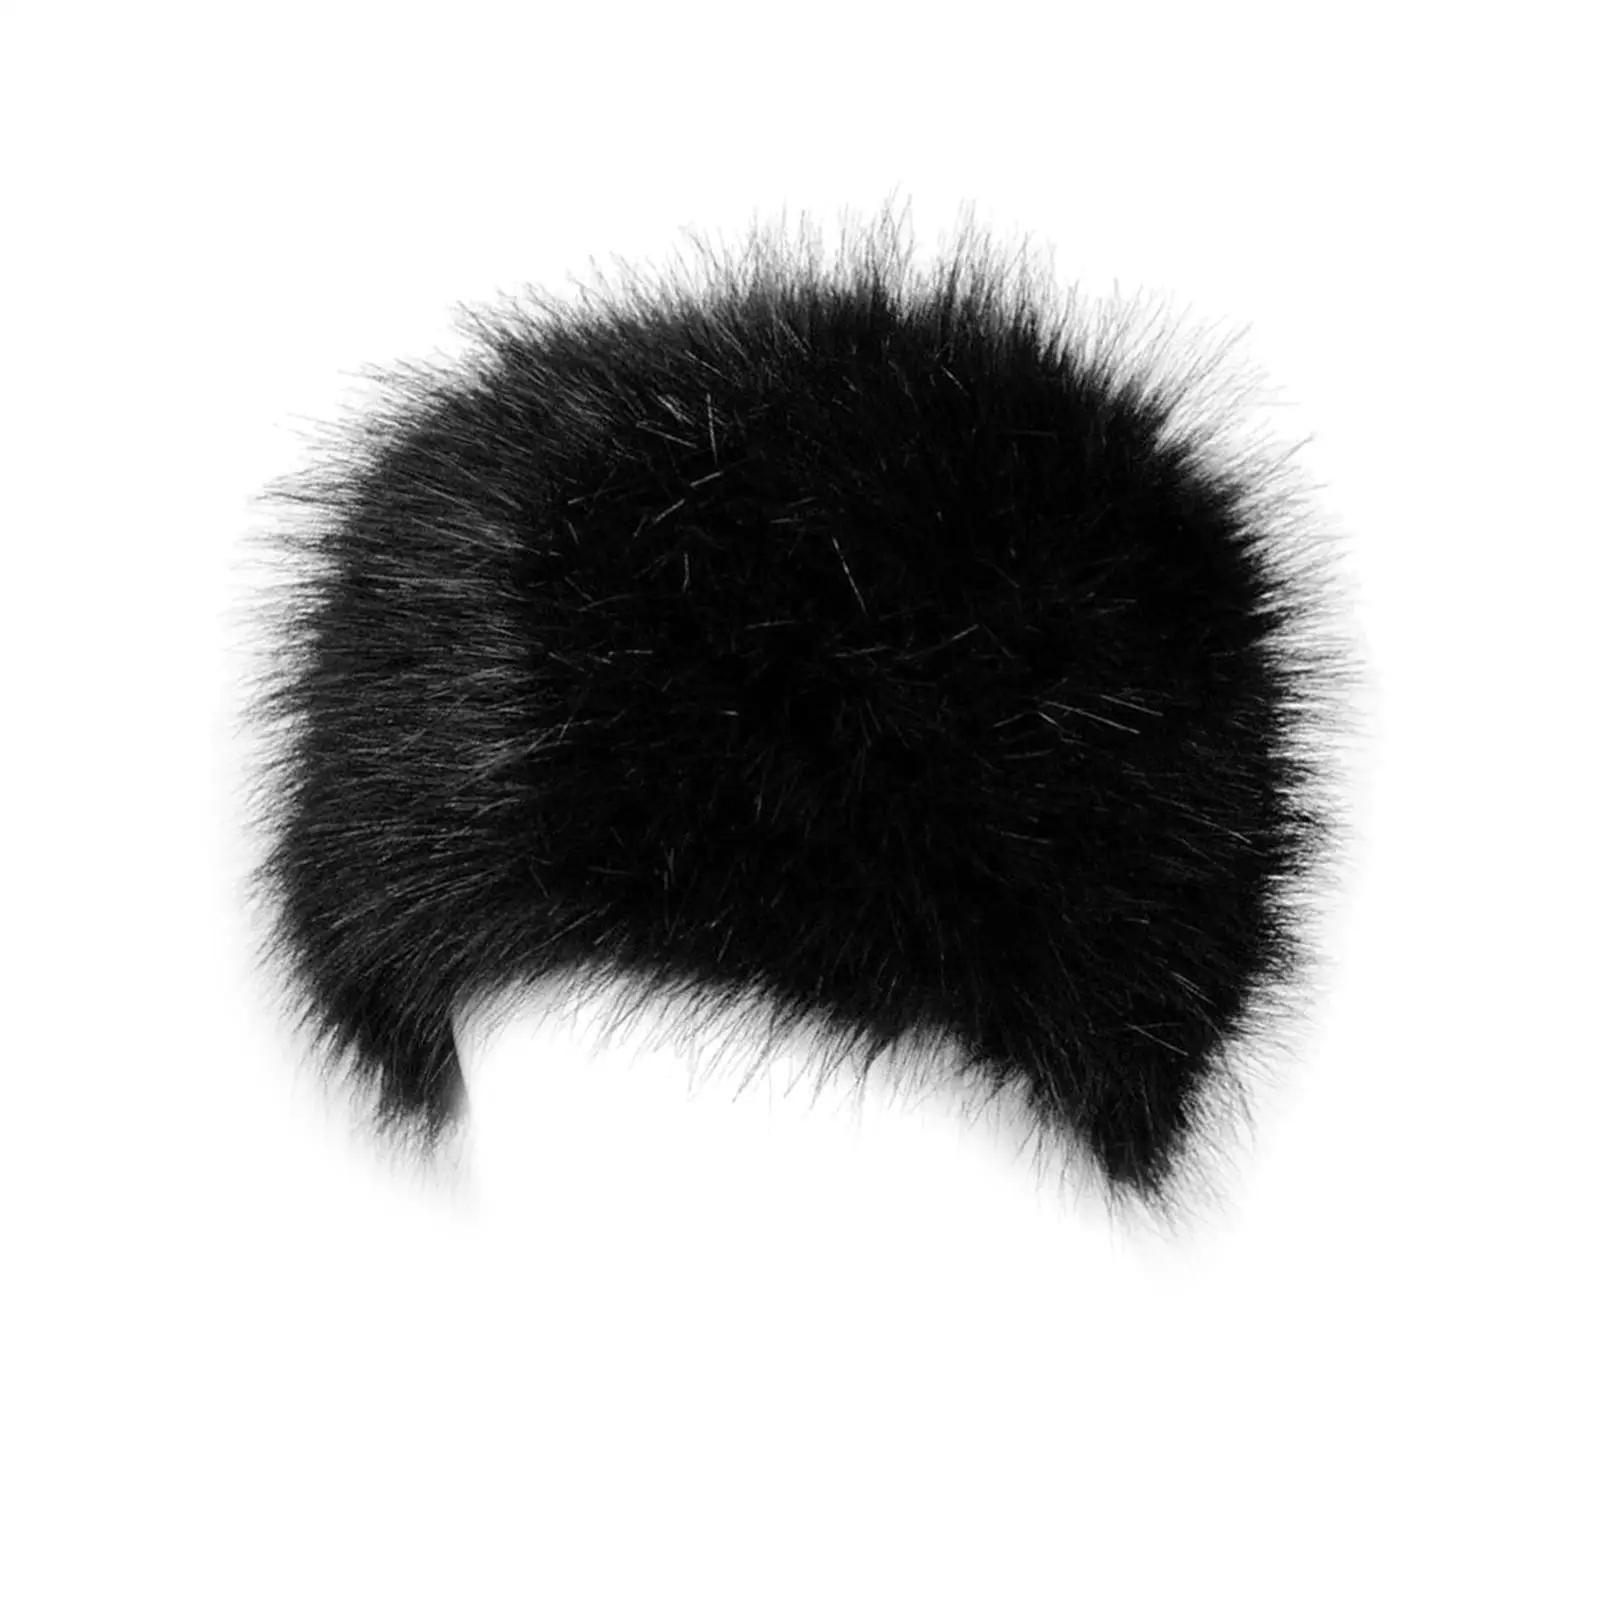 Winter Faux Fur Hat Skull Caps Cuff Beanie Outdoor Cossack Russian Ski Cap